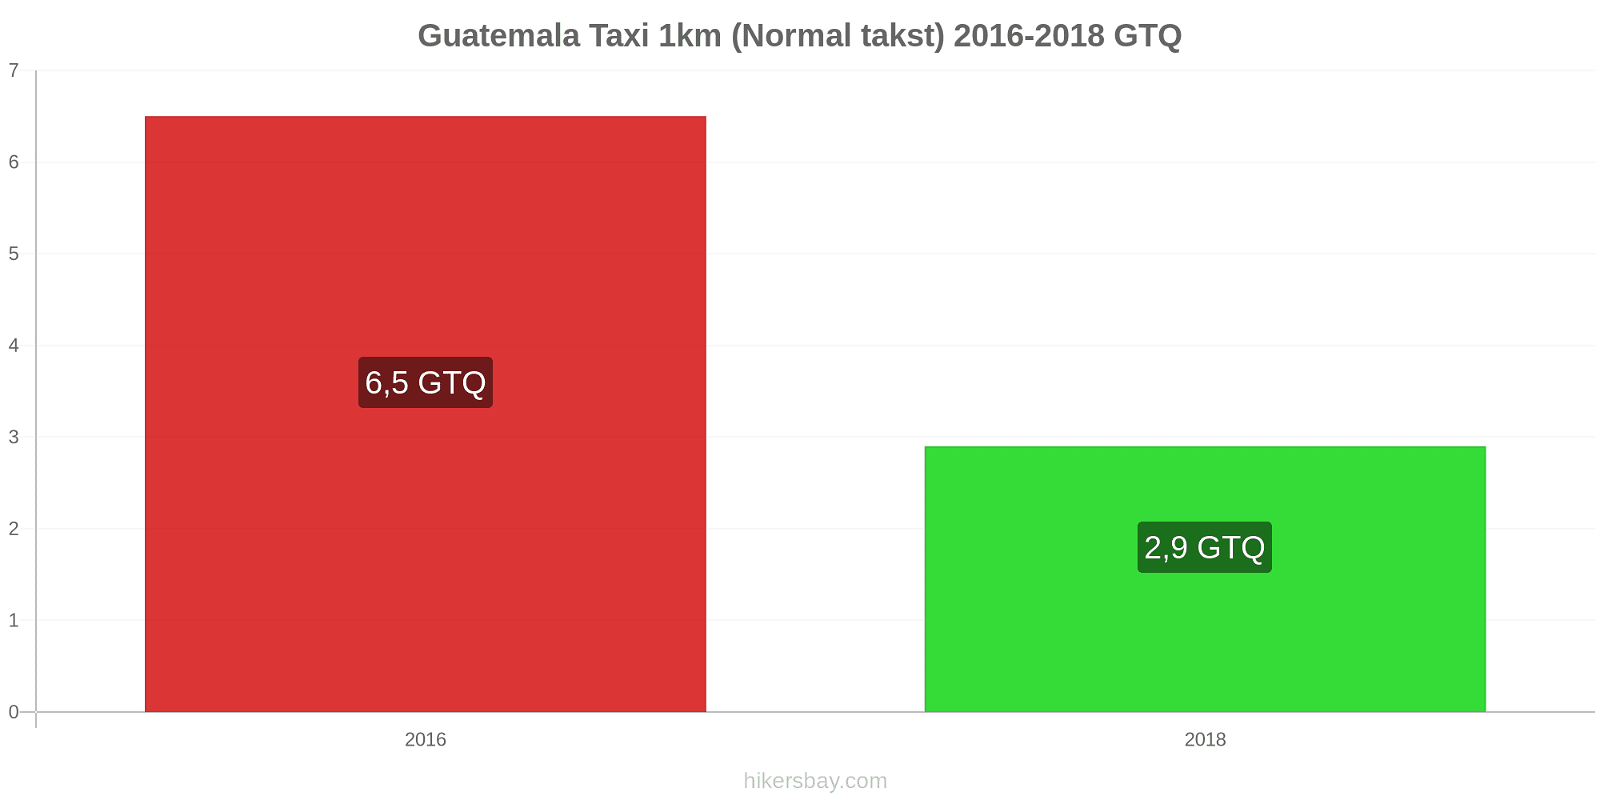 Guatemala prisændringer Taxi 1km (normal takst) hikersbay.com